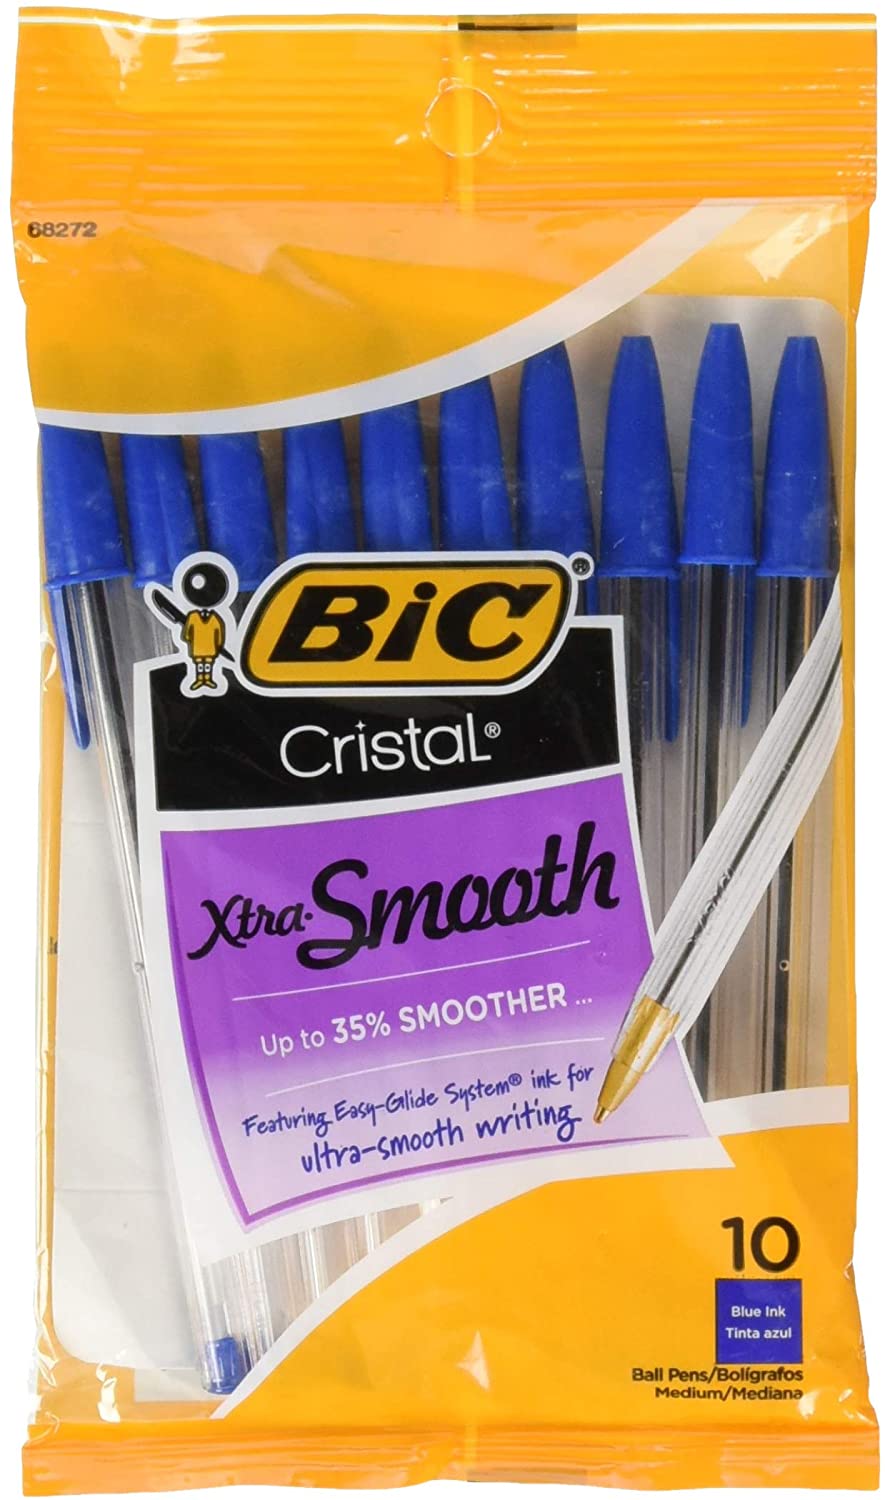 Pen+Gear Retractable Gel Pens, Assorted Colors, 24 Count - Yahoo